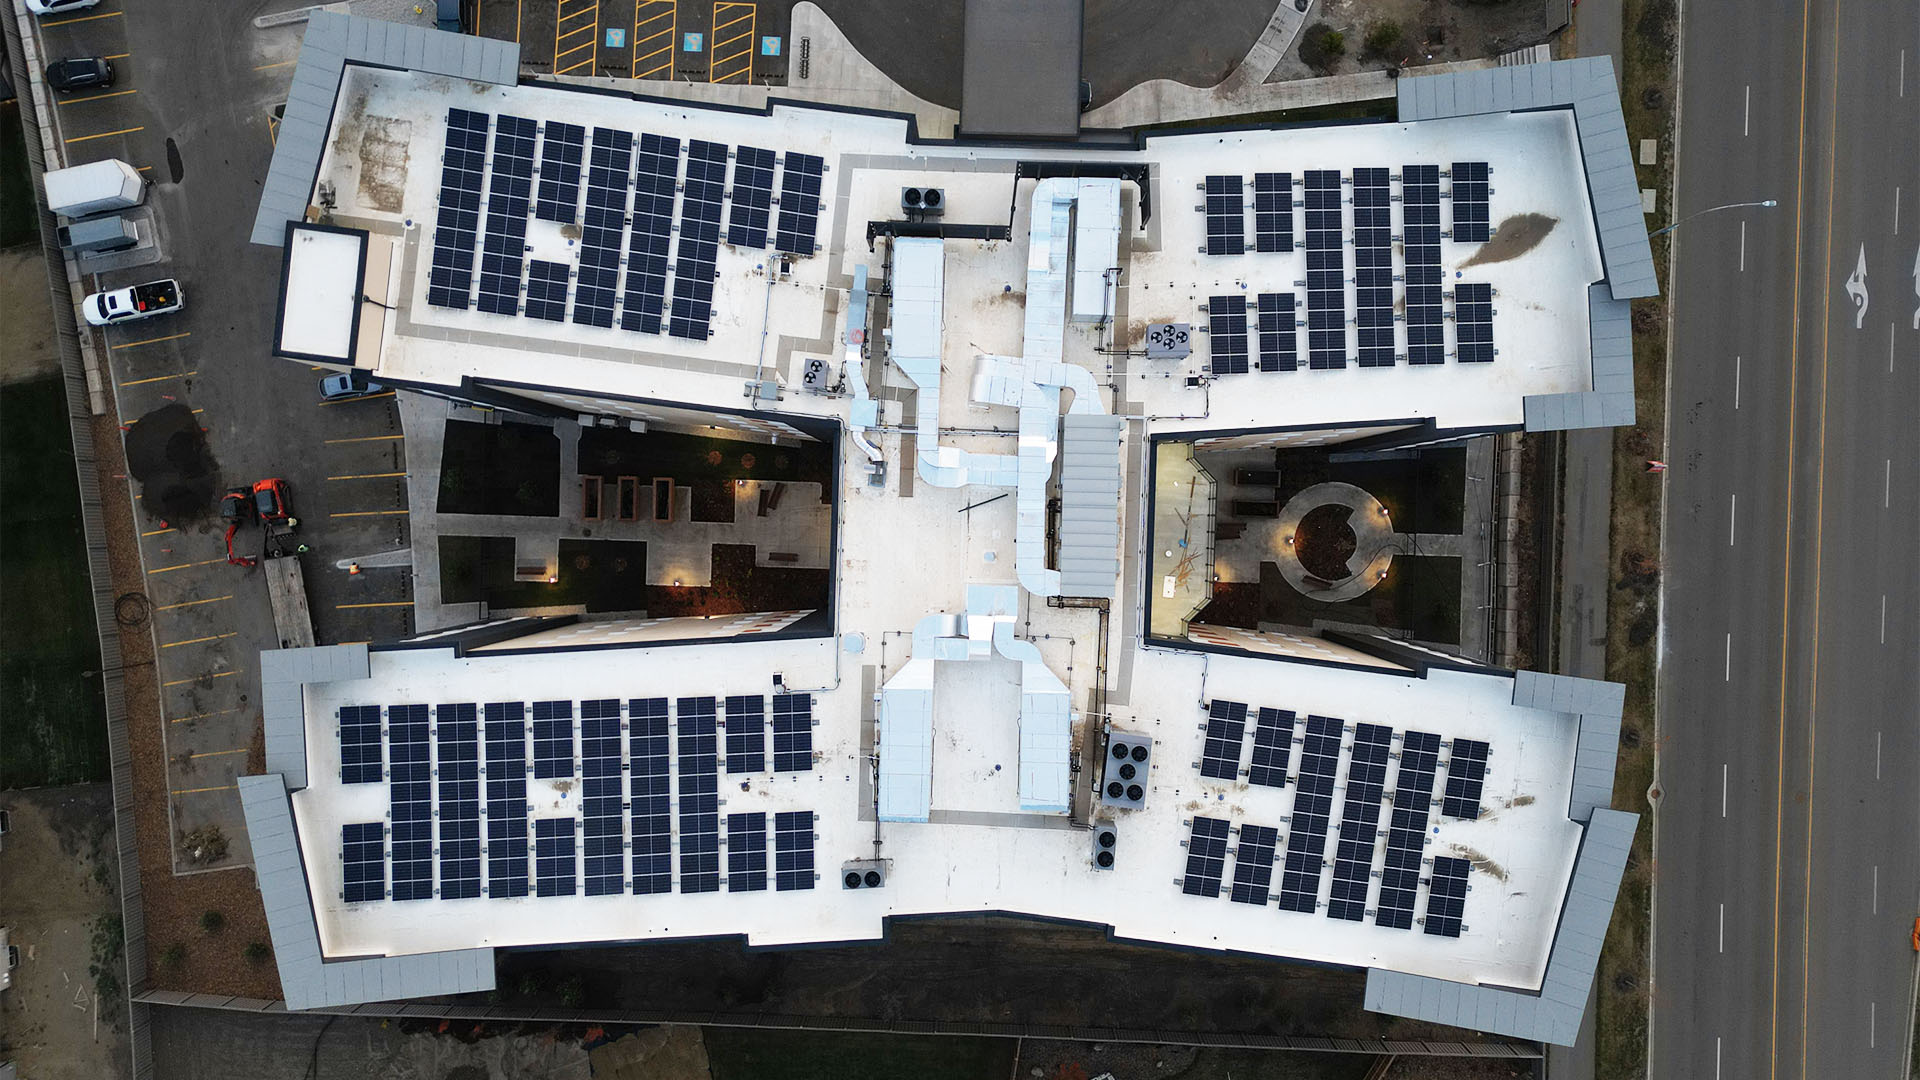 Shasta Care Community rooftop solar array